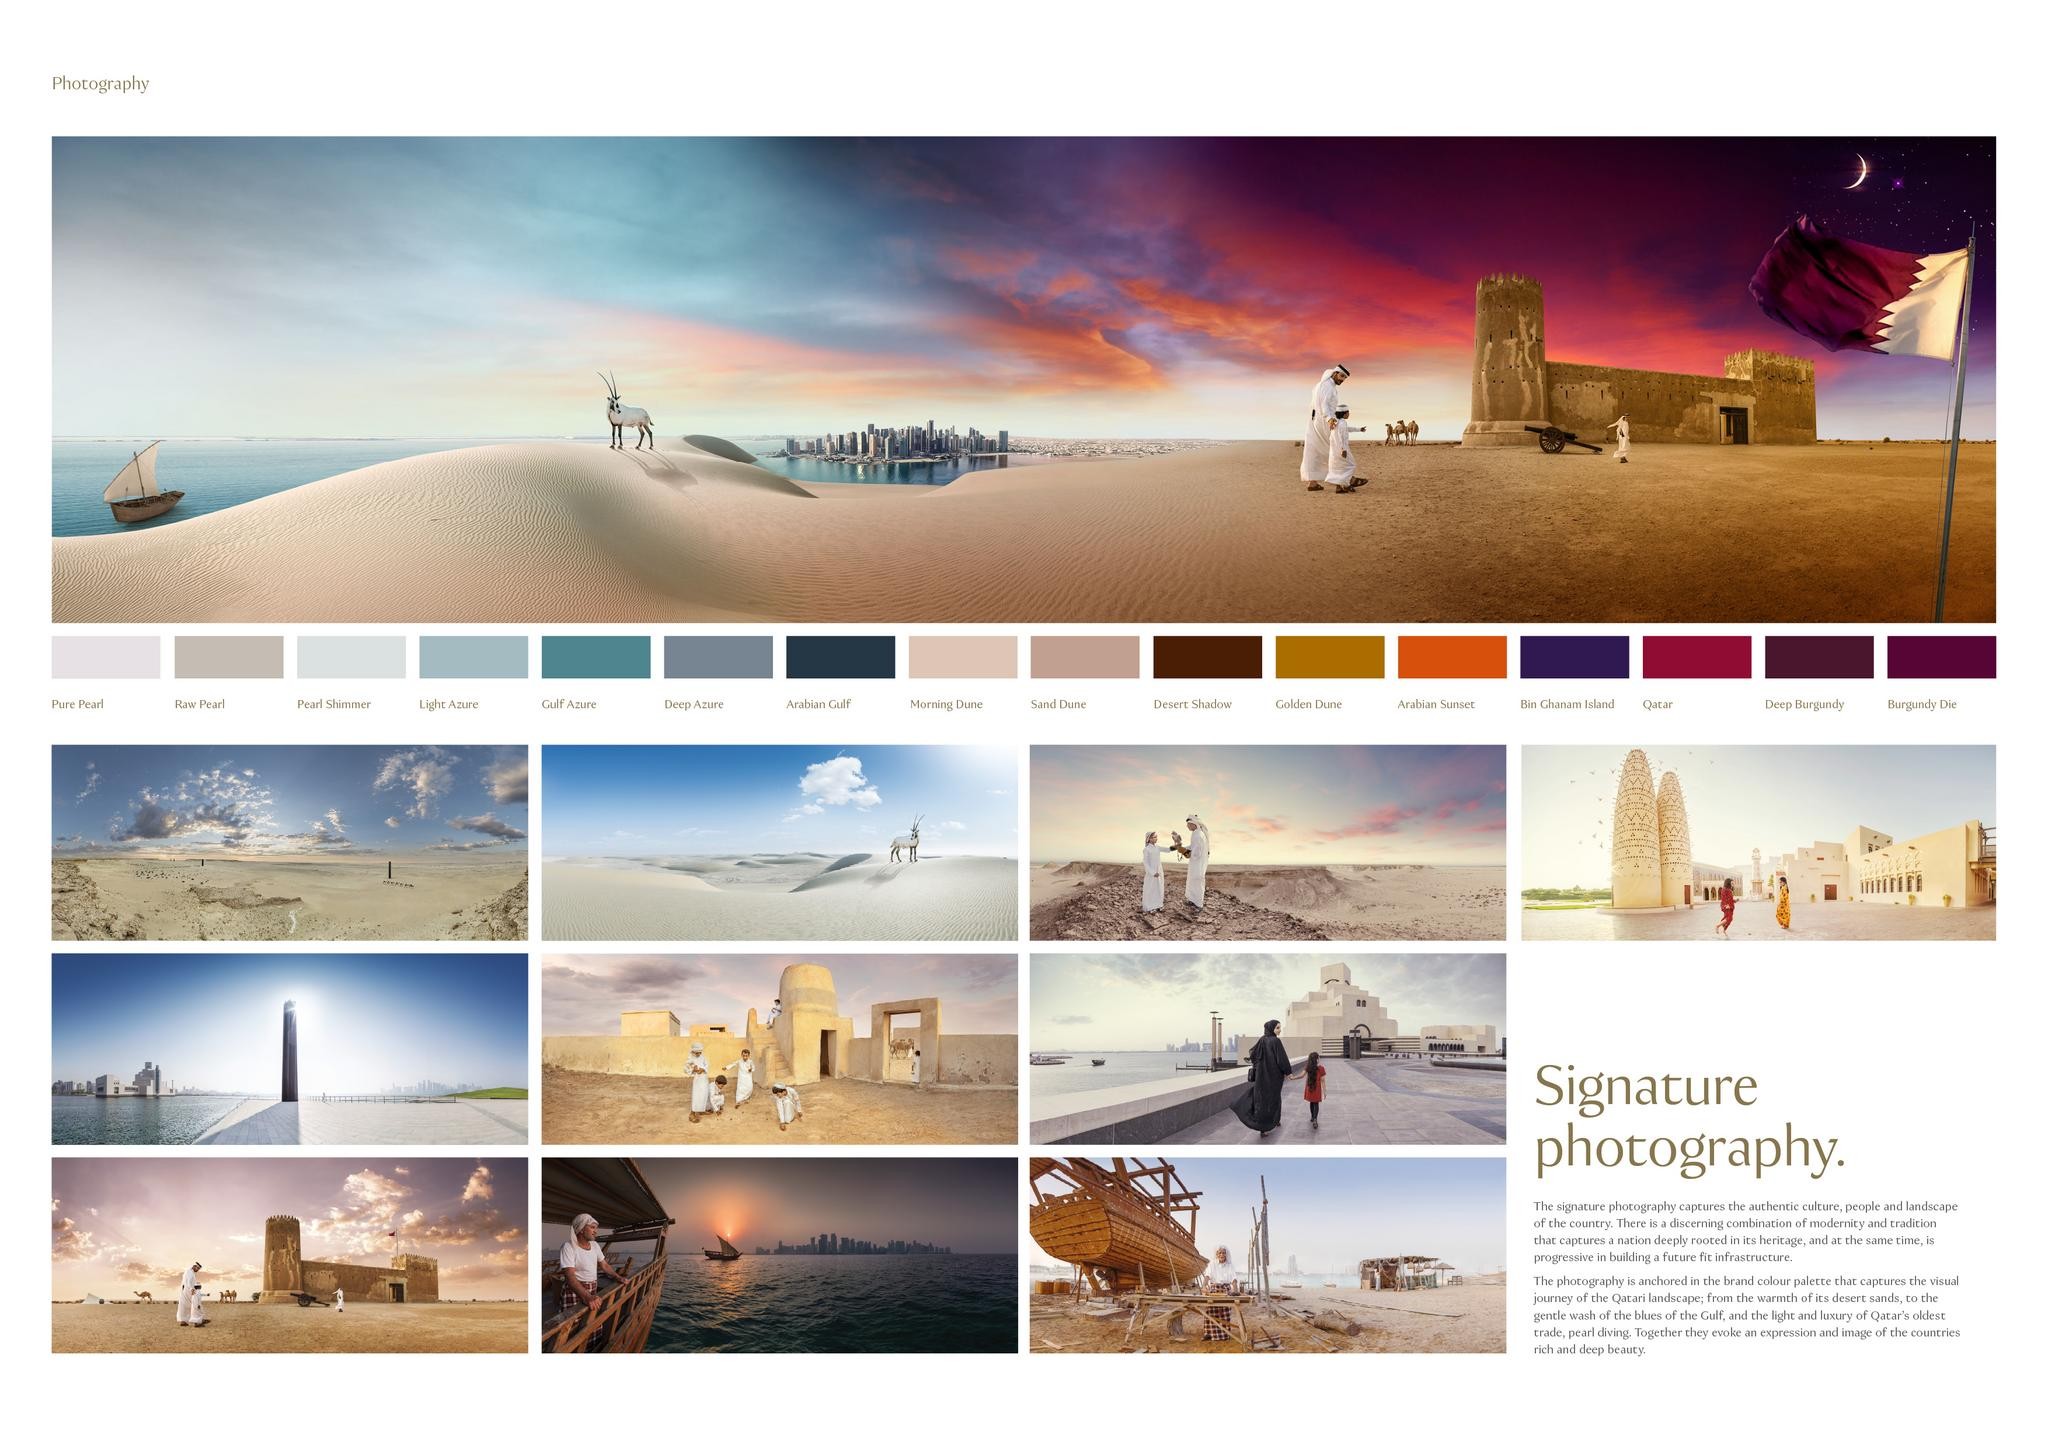 Qatar Signature Photography